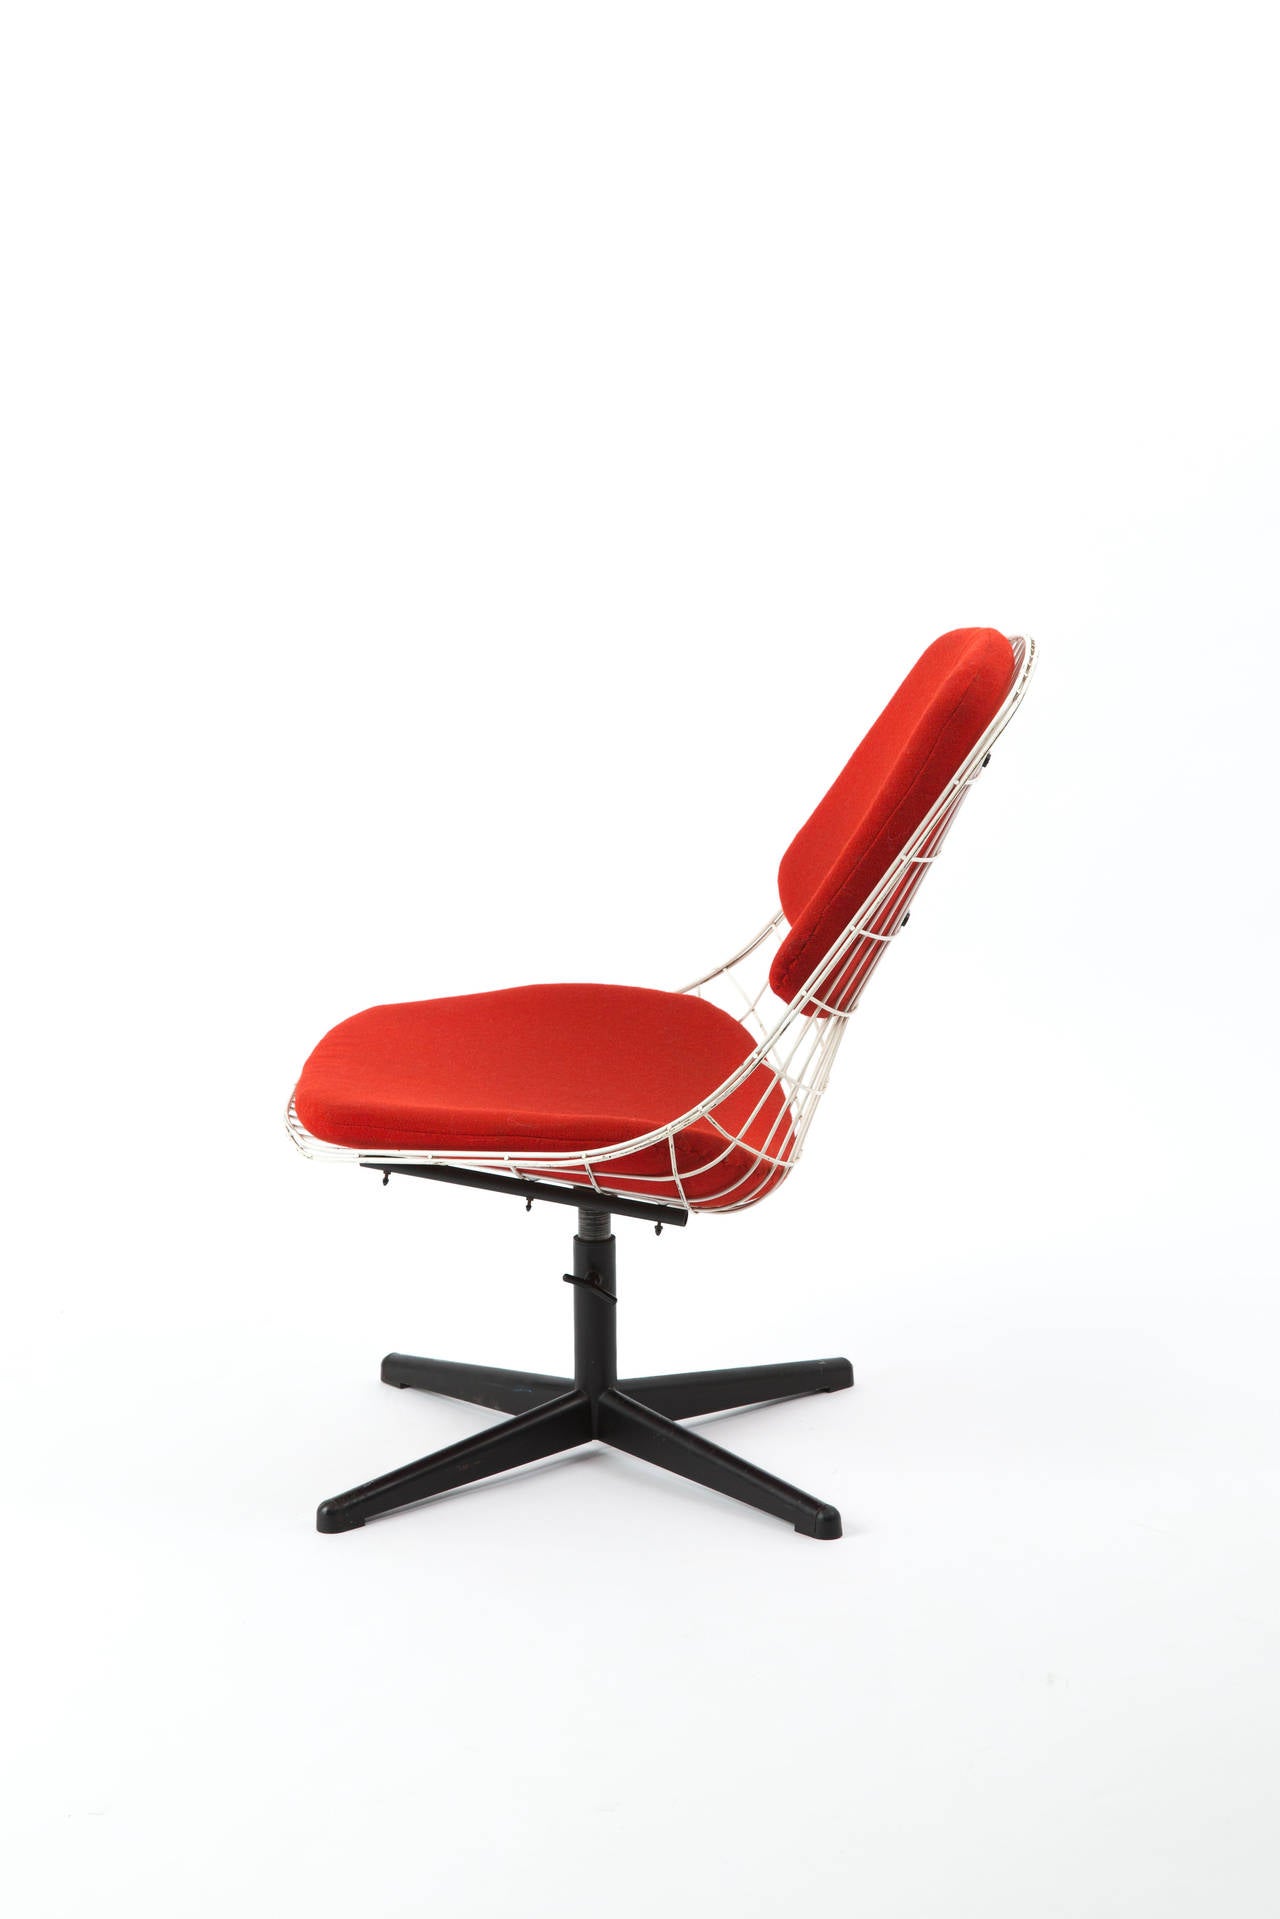 Mid-Century Modern Cees Braakman for Pastoe Swivel Chair For Sale